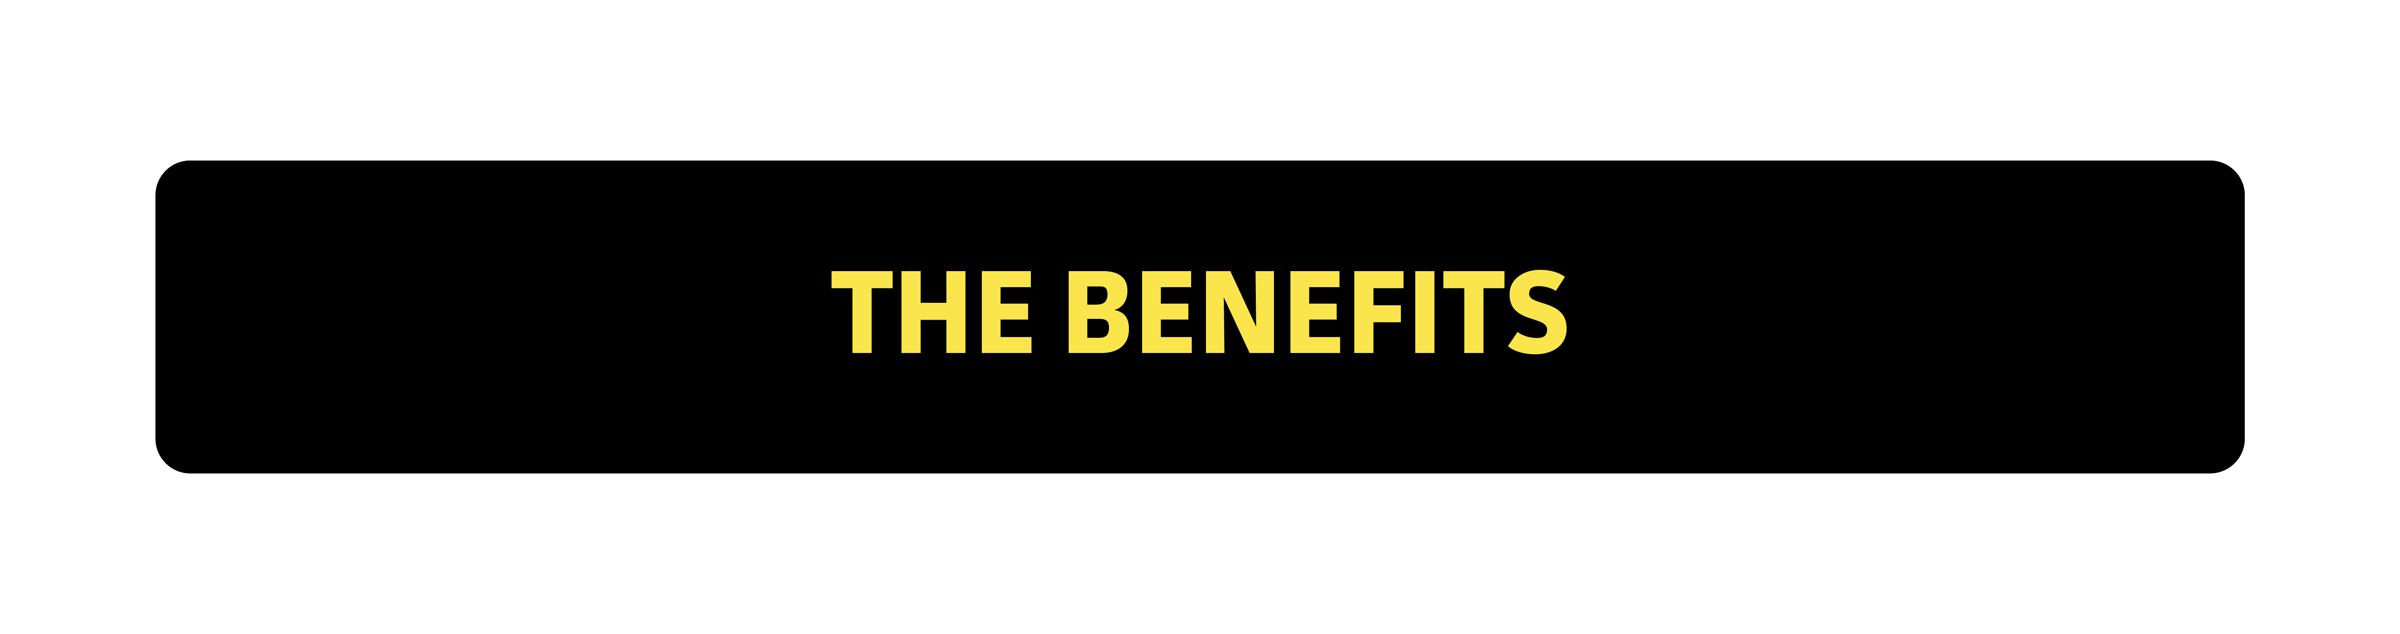 The Benefits